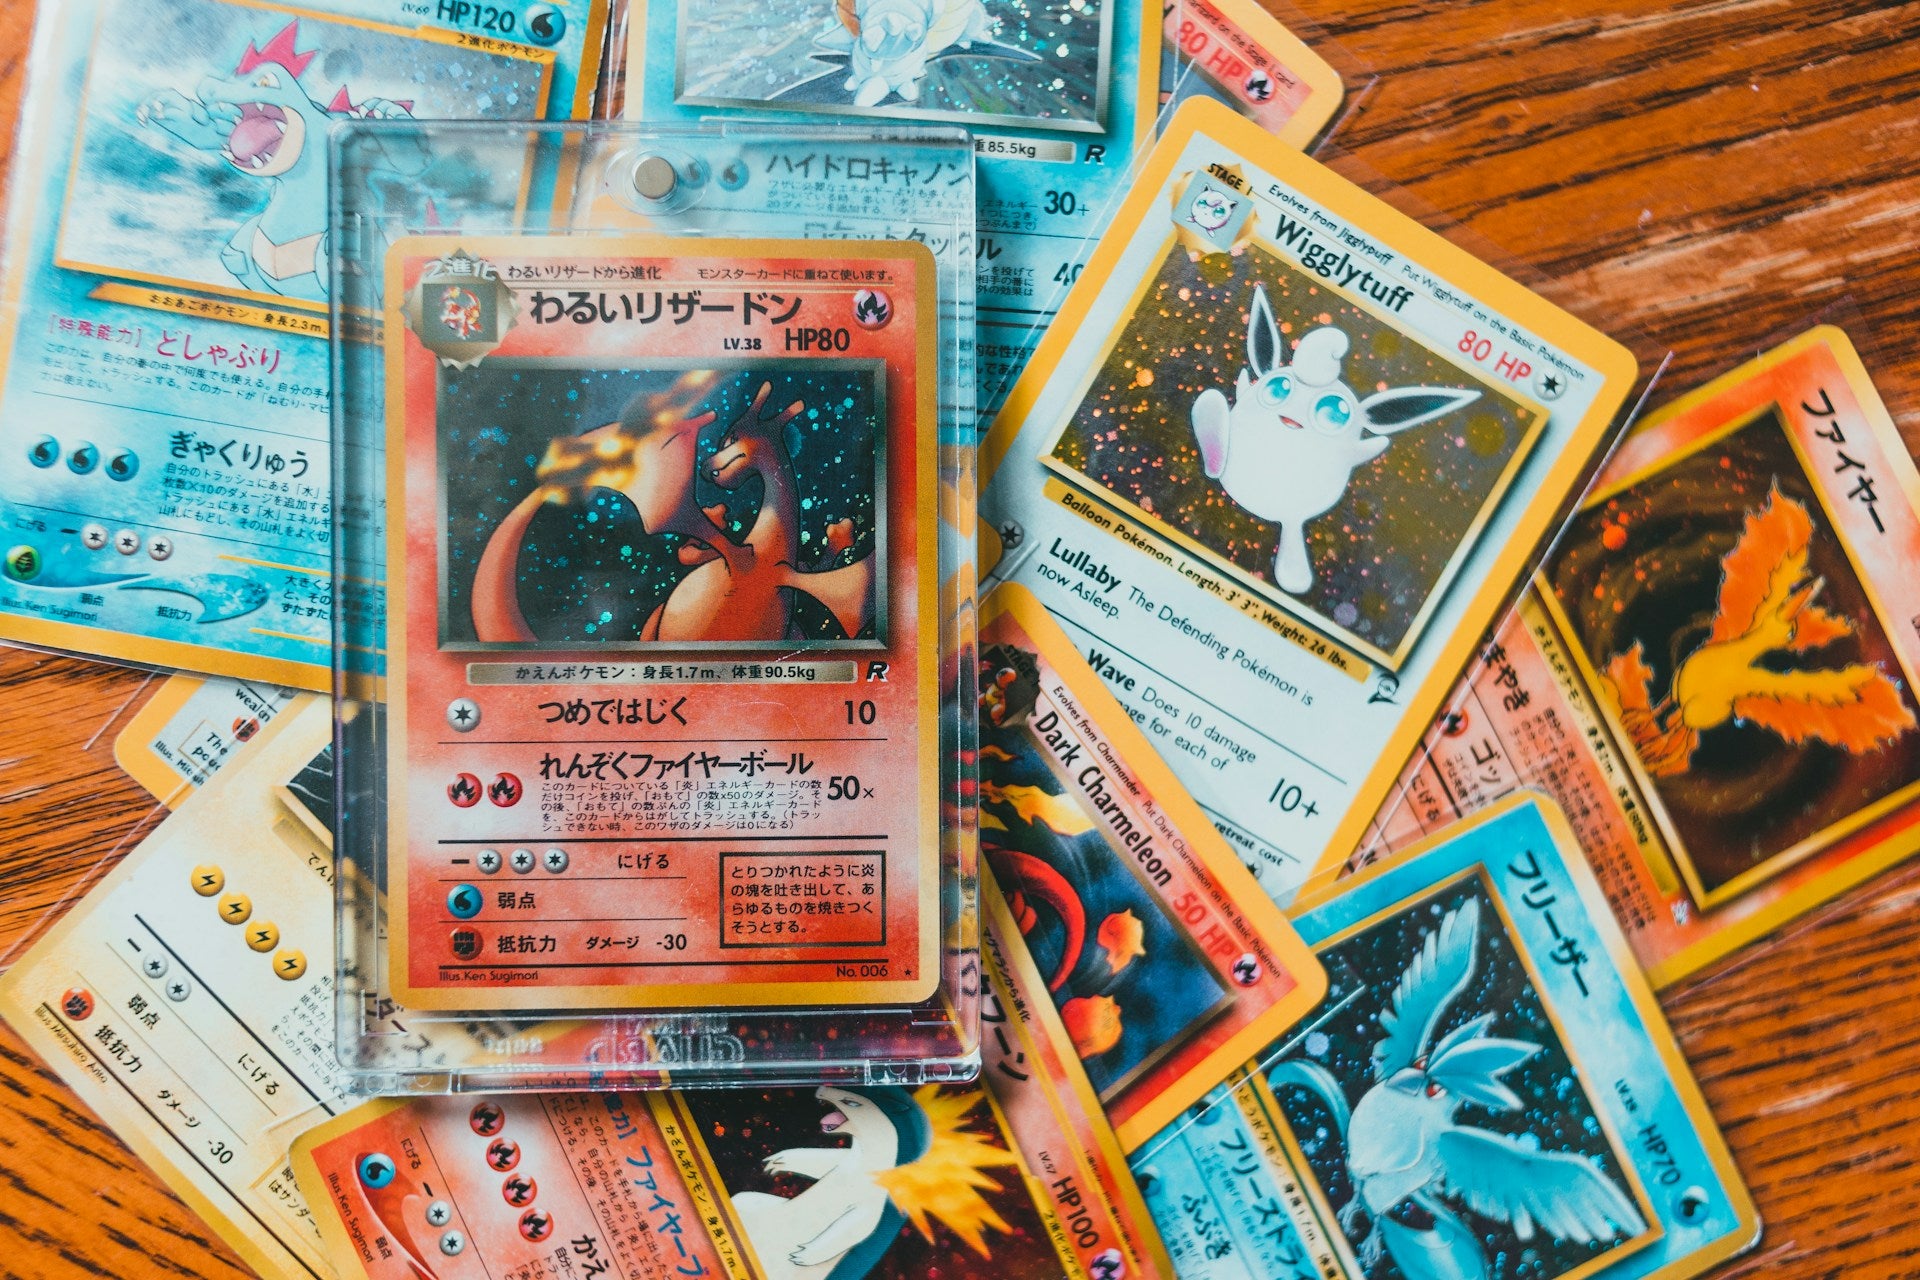 a rare Japanese Charizard Pokemon card on a table